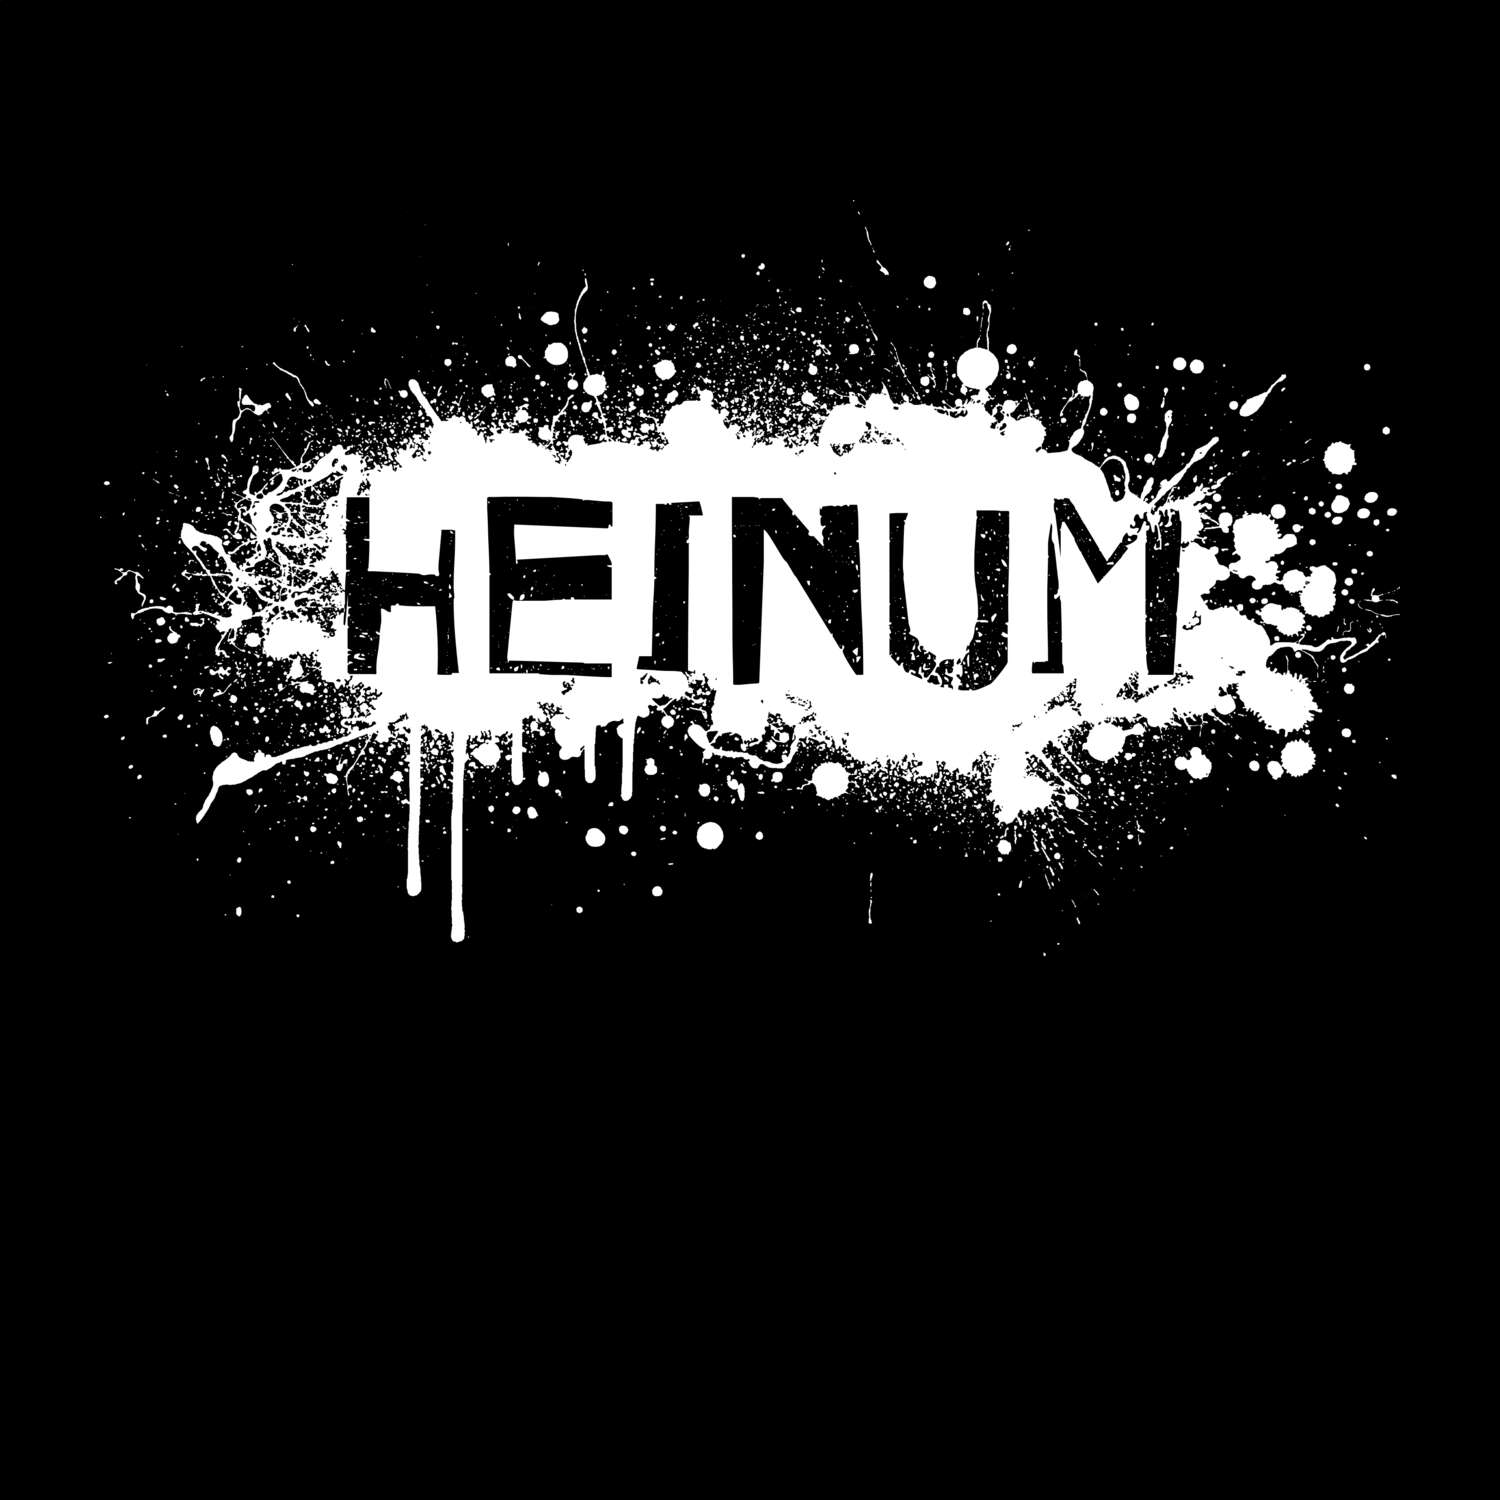 Heinum T-Shirt »Paint Splash Punk«